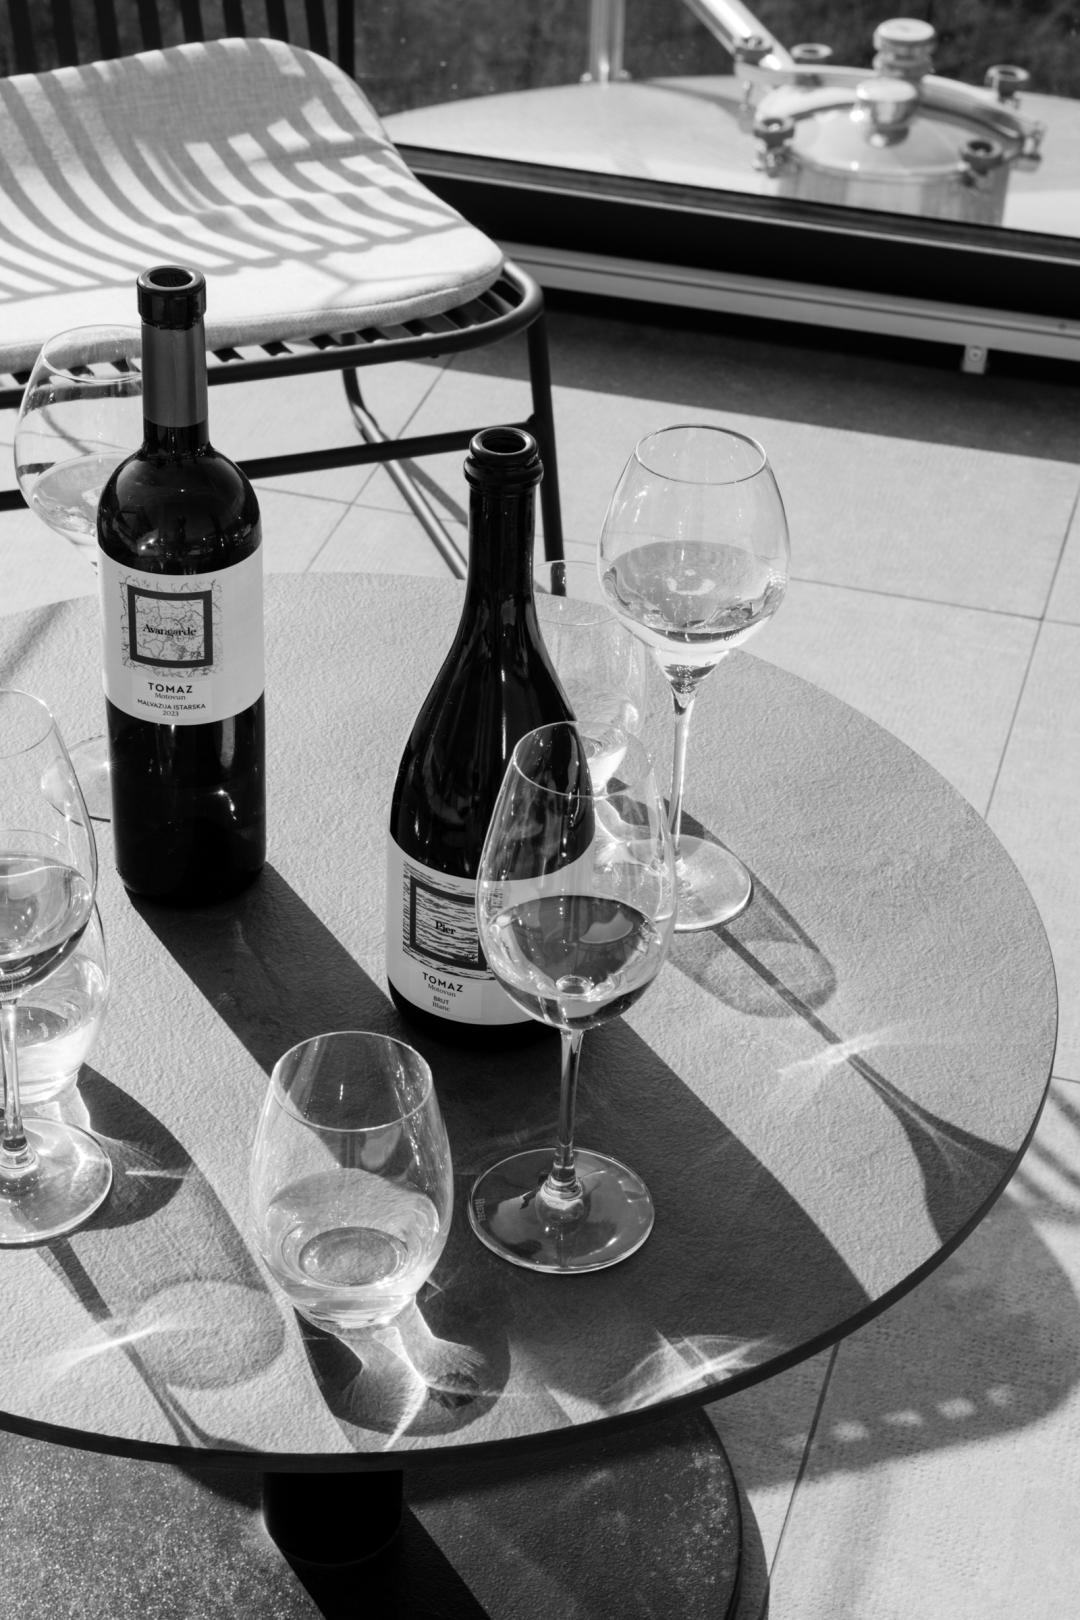 Proveli smo popodne u novoj, impresivnoj vinariji Tomaz s pogledom na Motovun